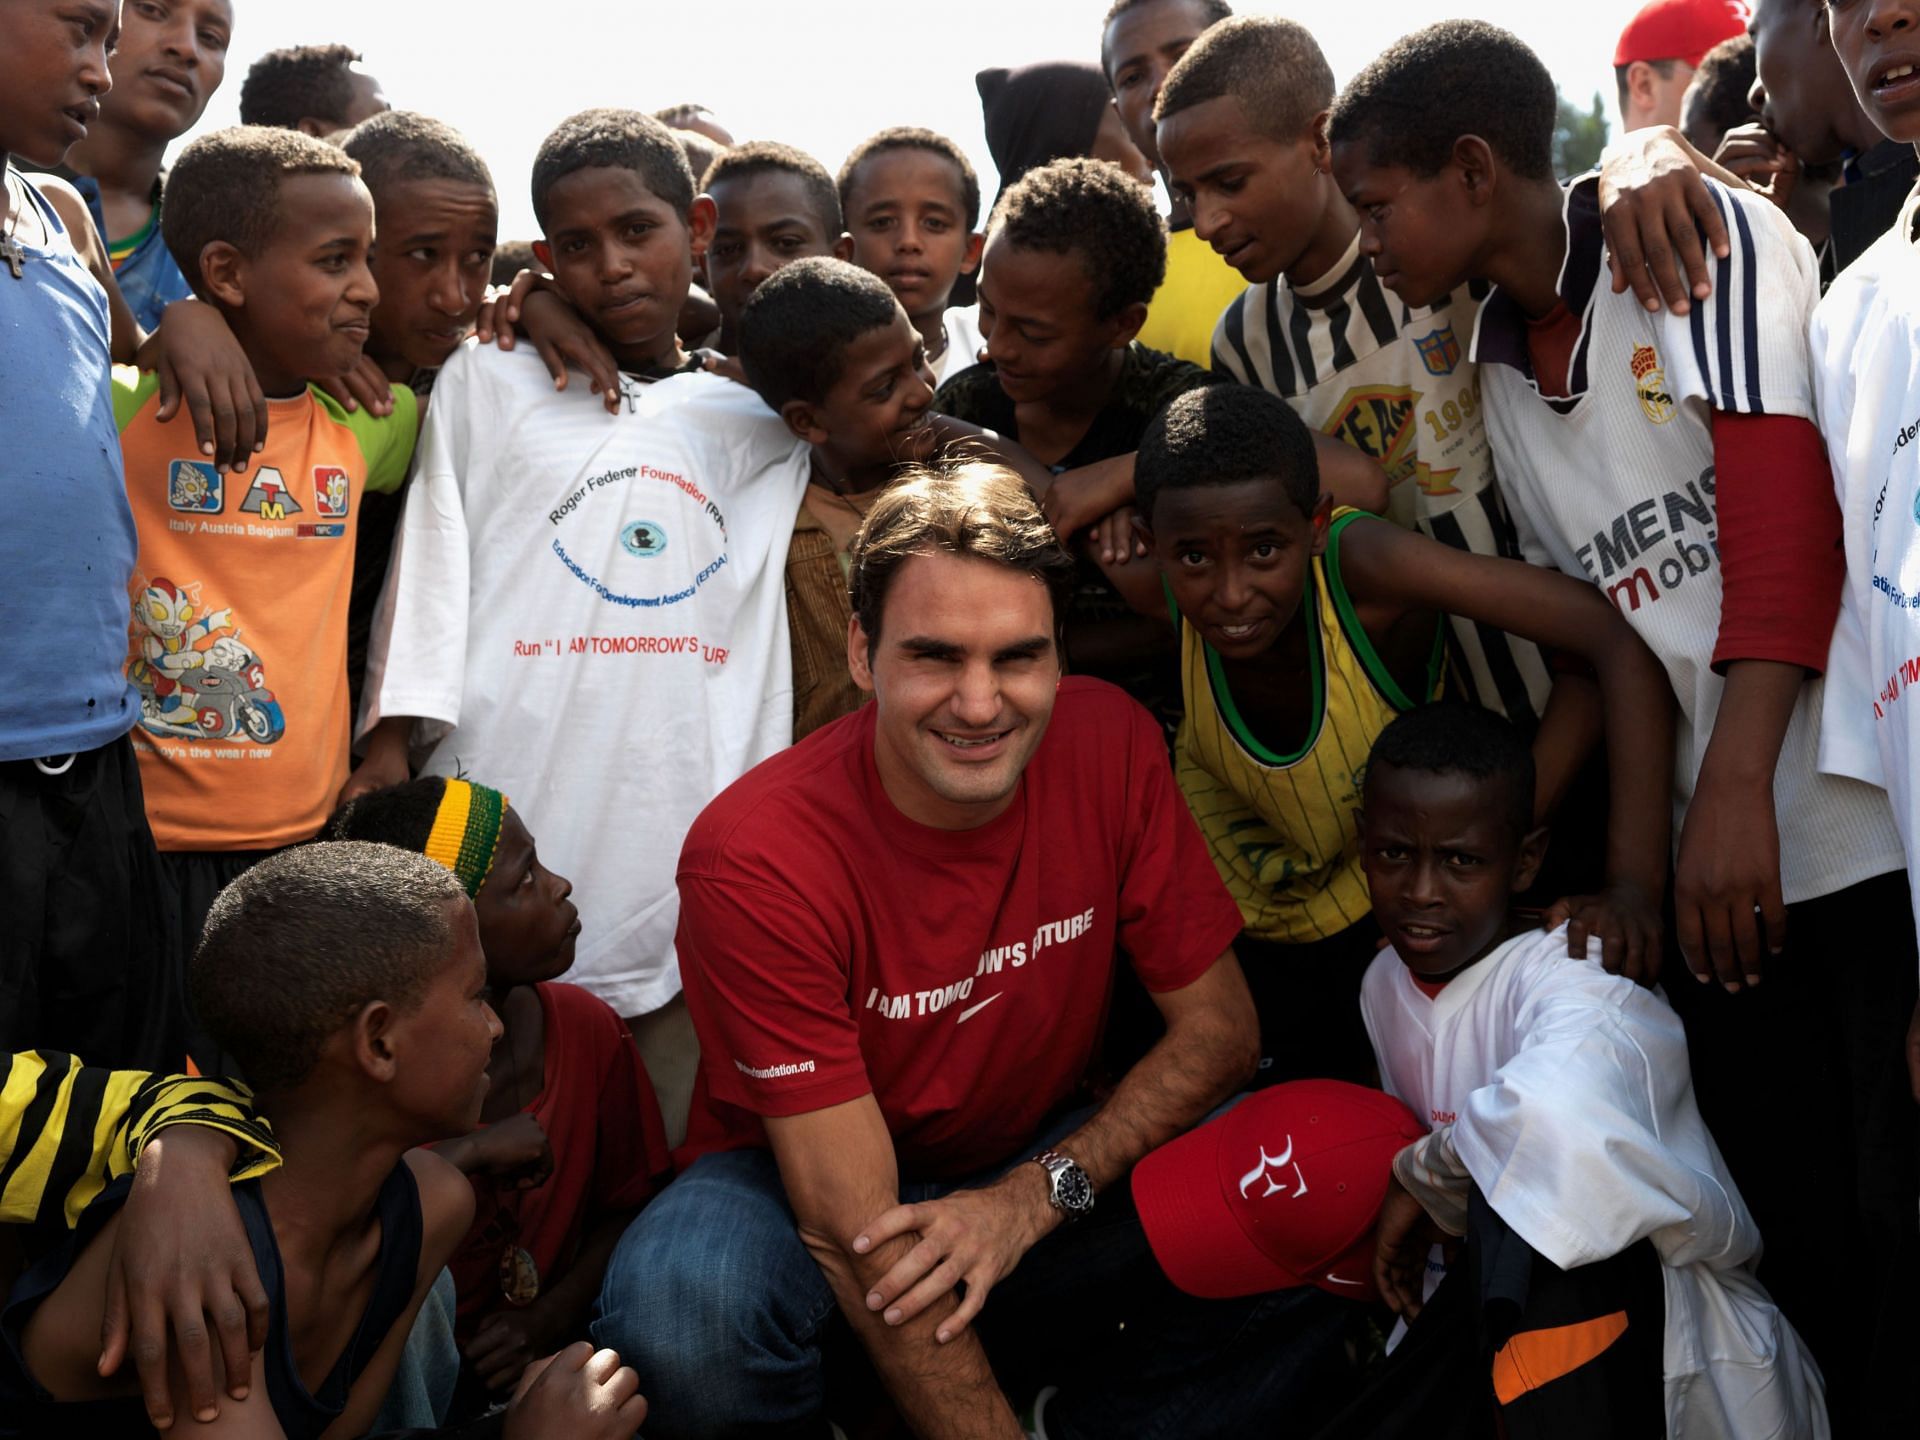 Roger Federer on his visit to Ethiopia for the Roger Federer Foundation in 2010